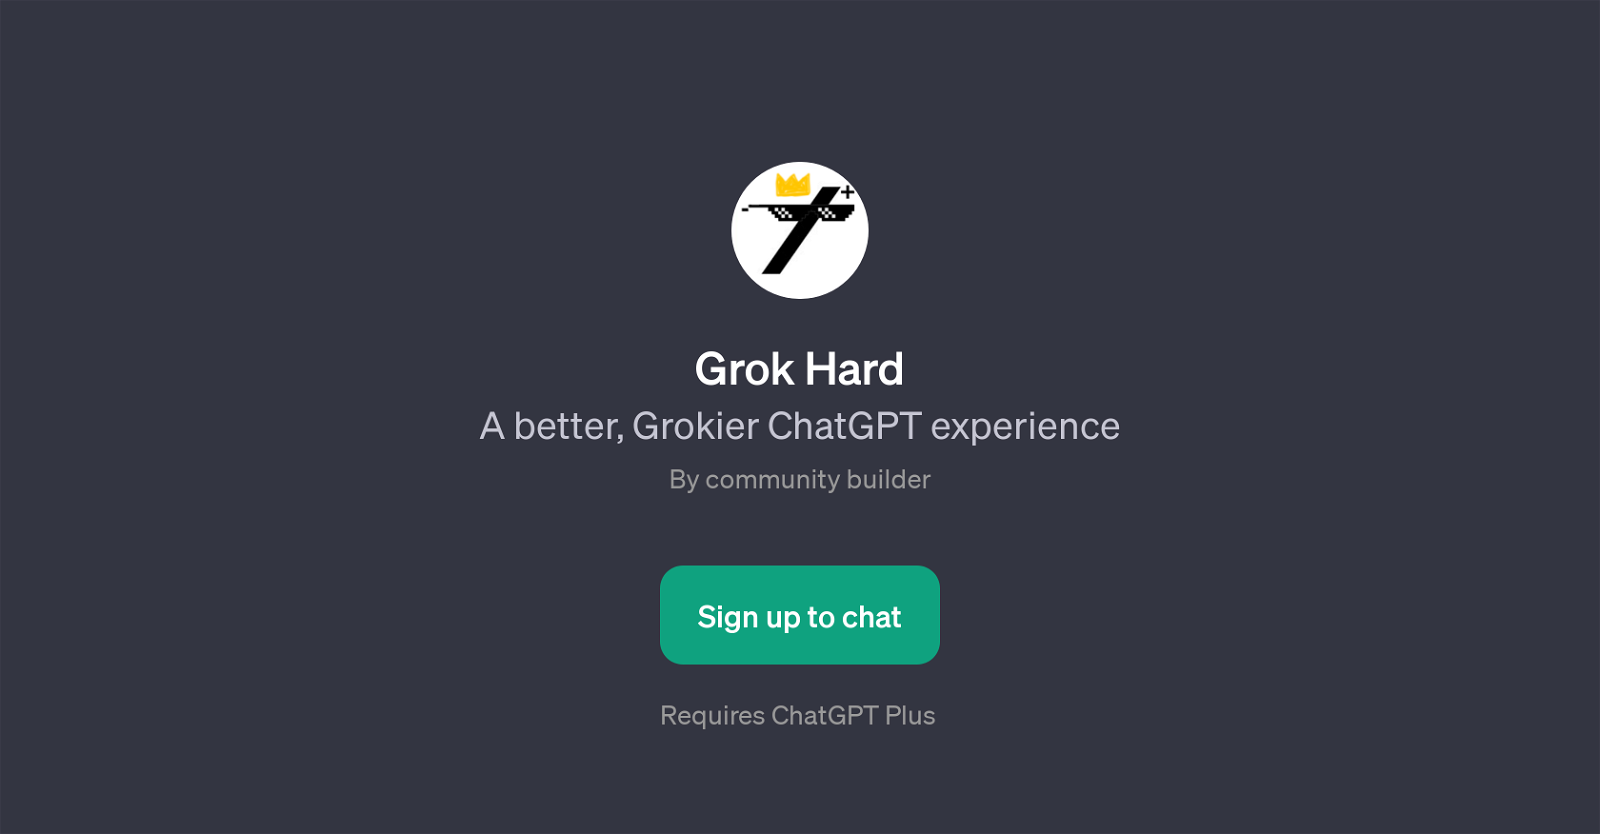 Grok Hard website